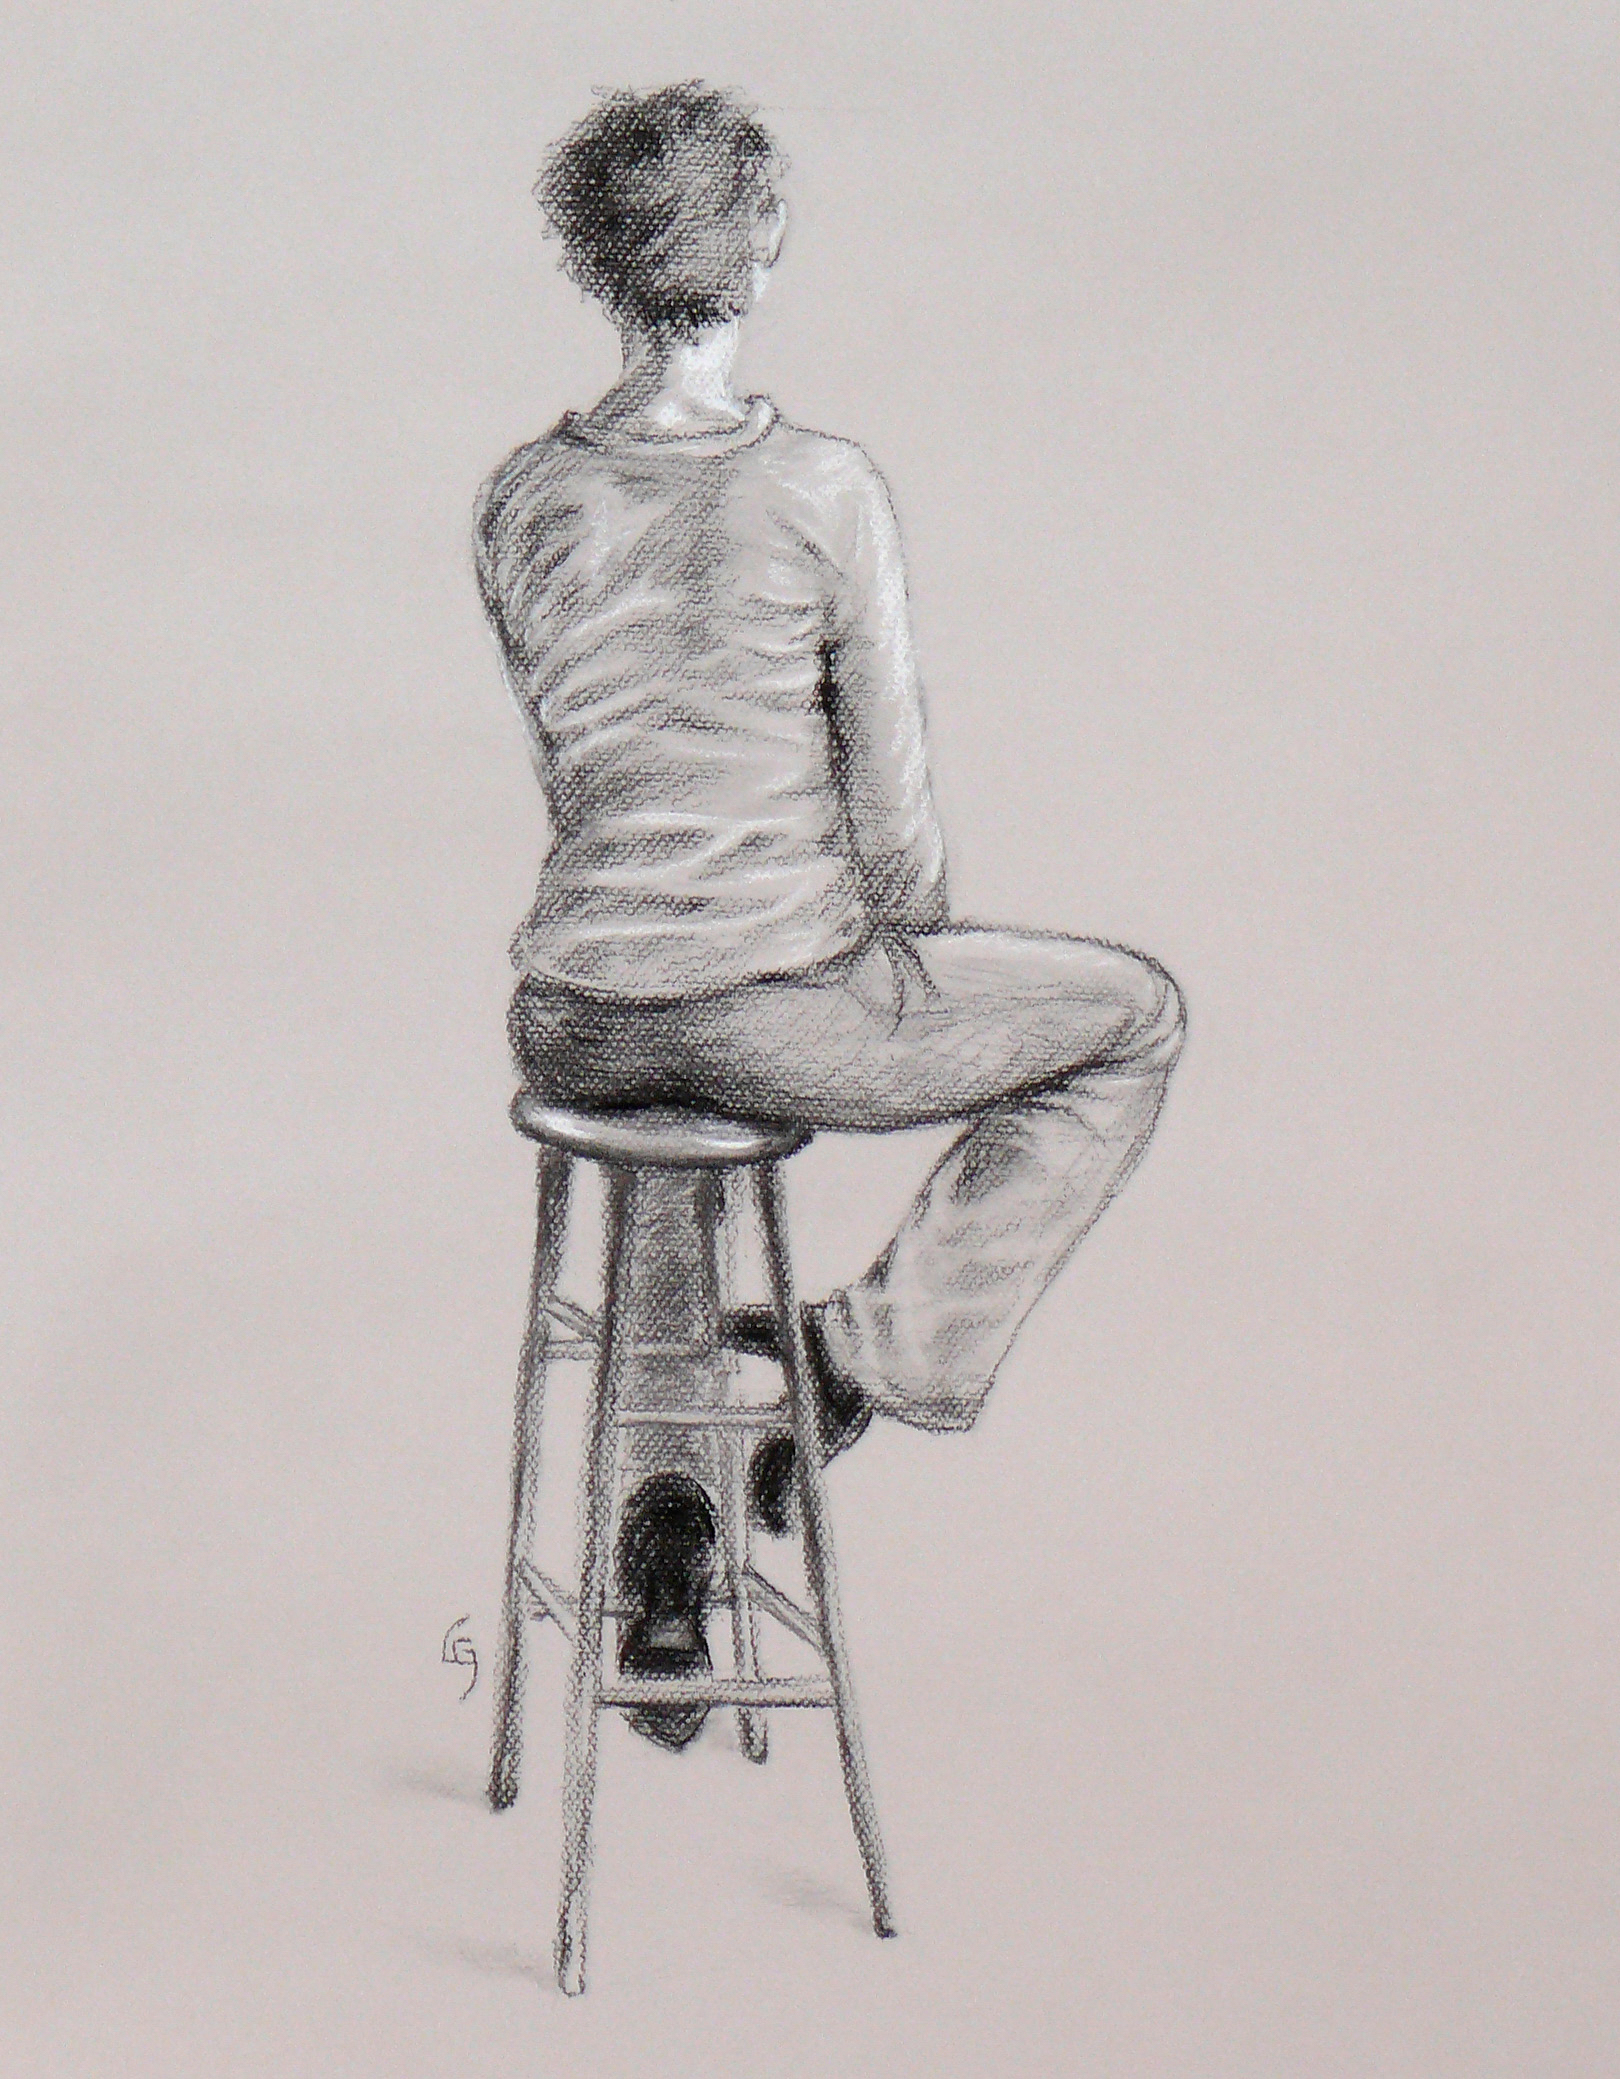 Girl on stool